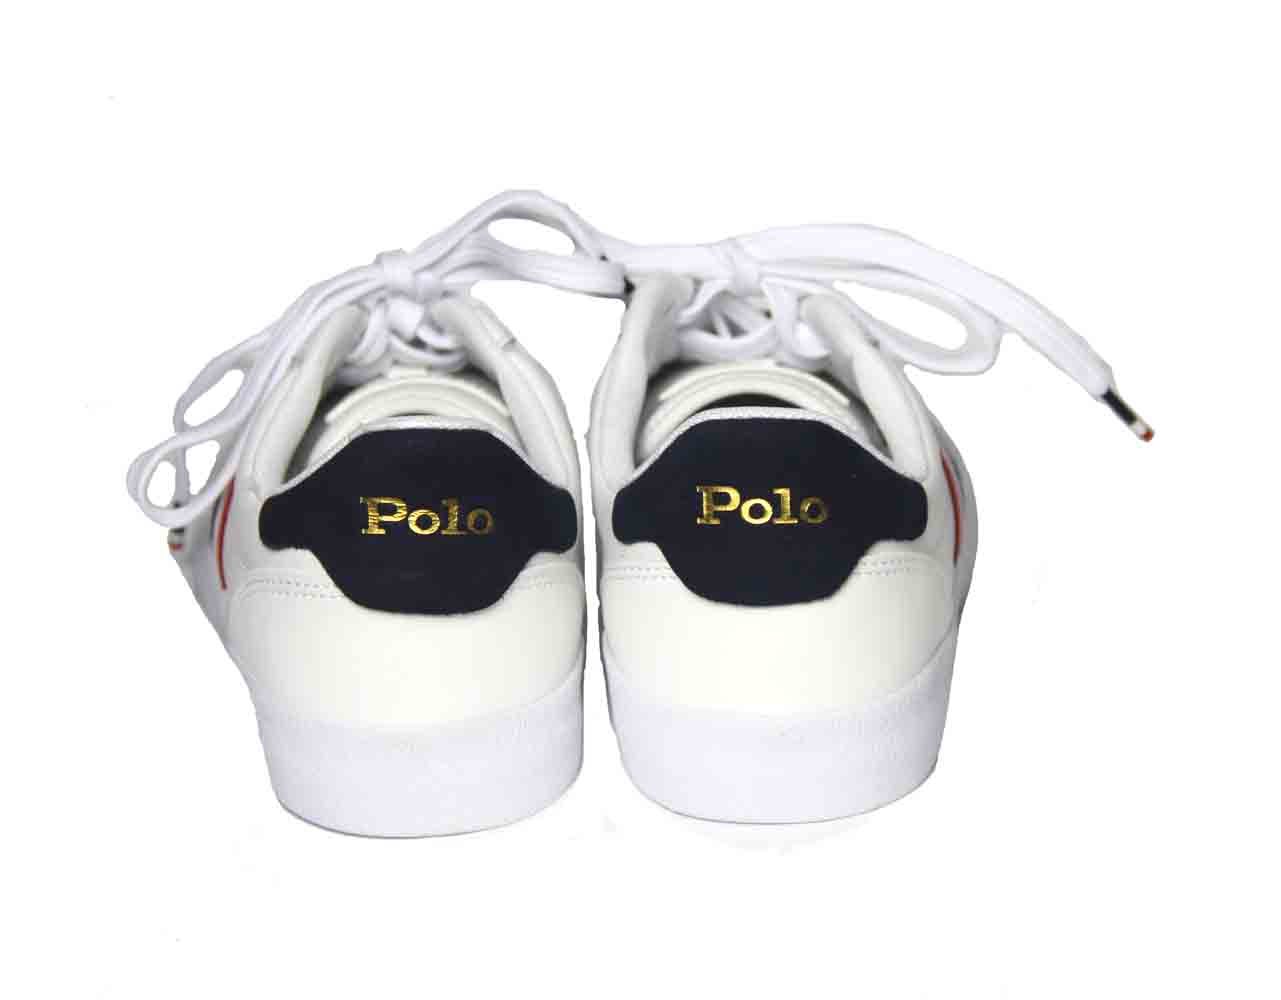 Polo Ralph Lauren Court VLC Shoes Sneakers White Sport Leather Men's Size 9 M